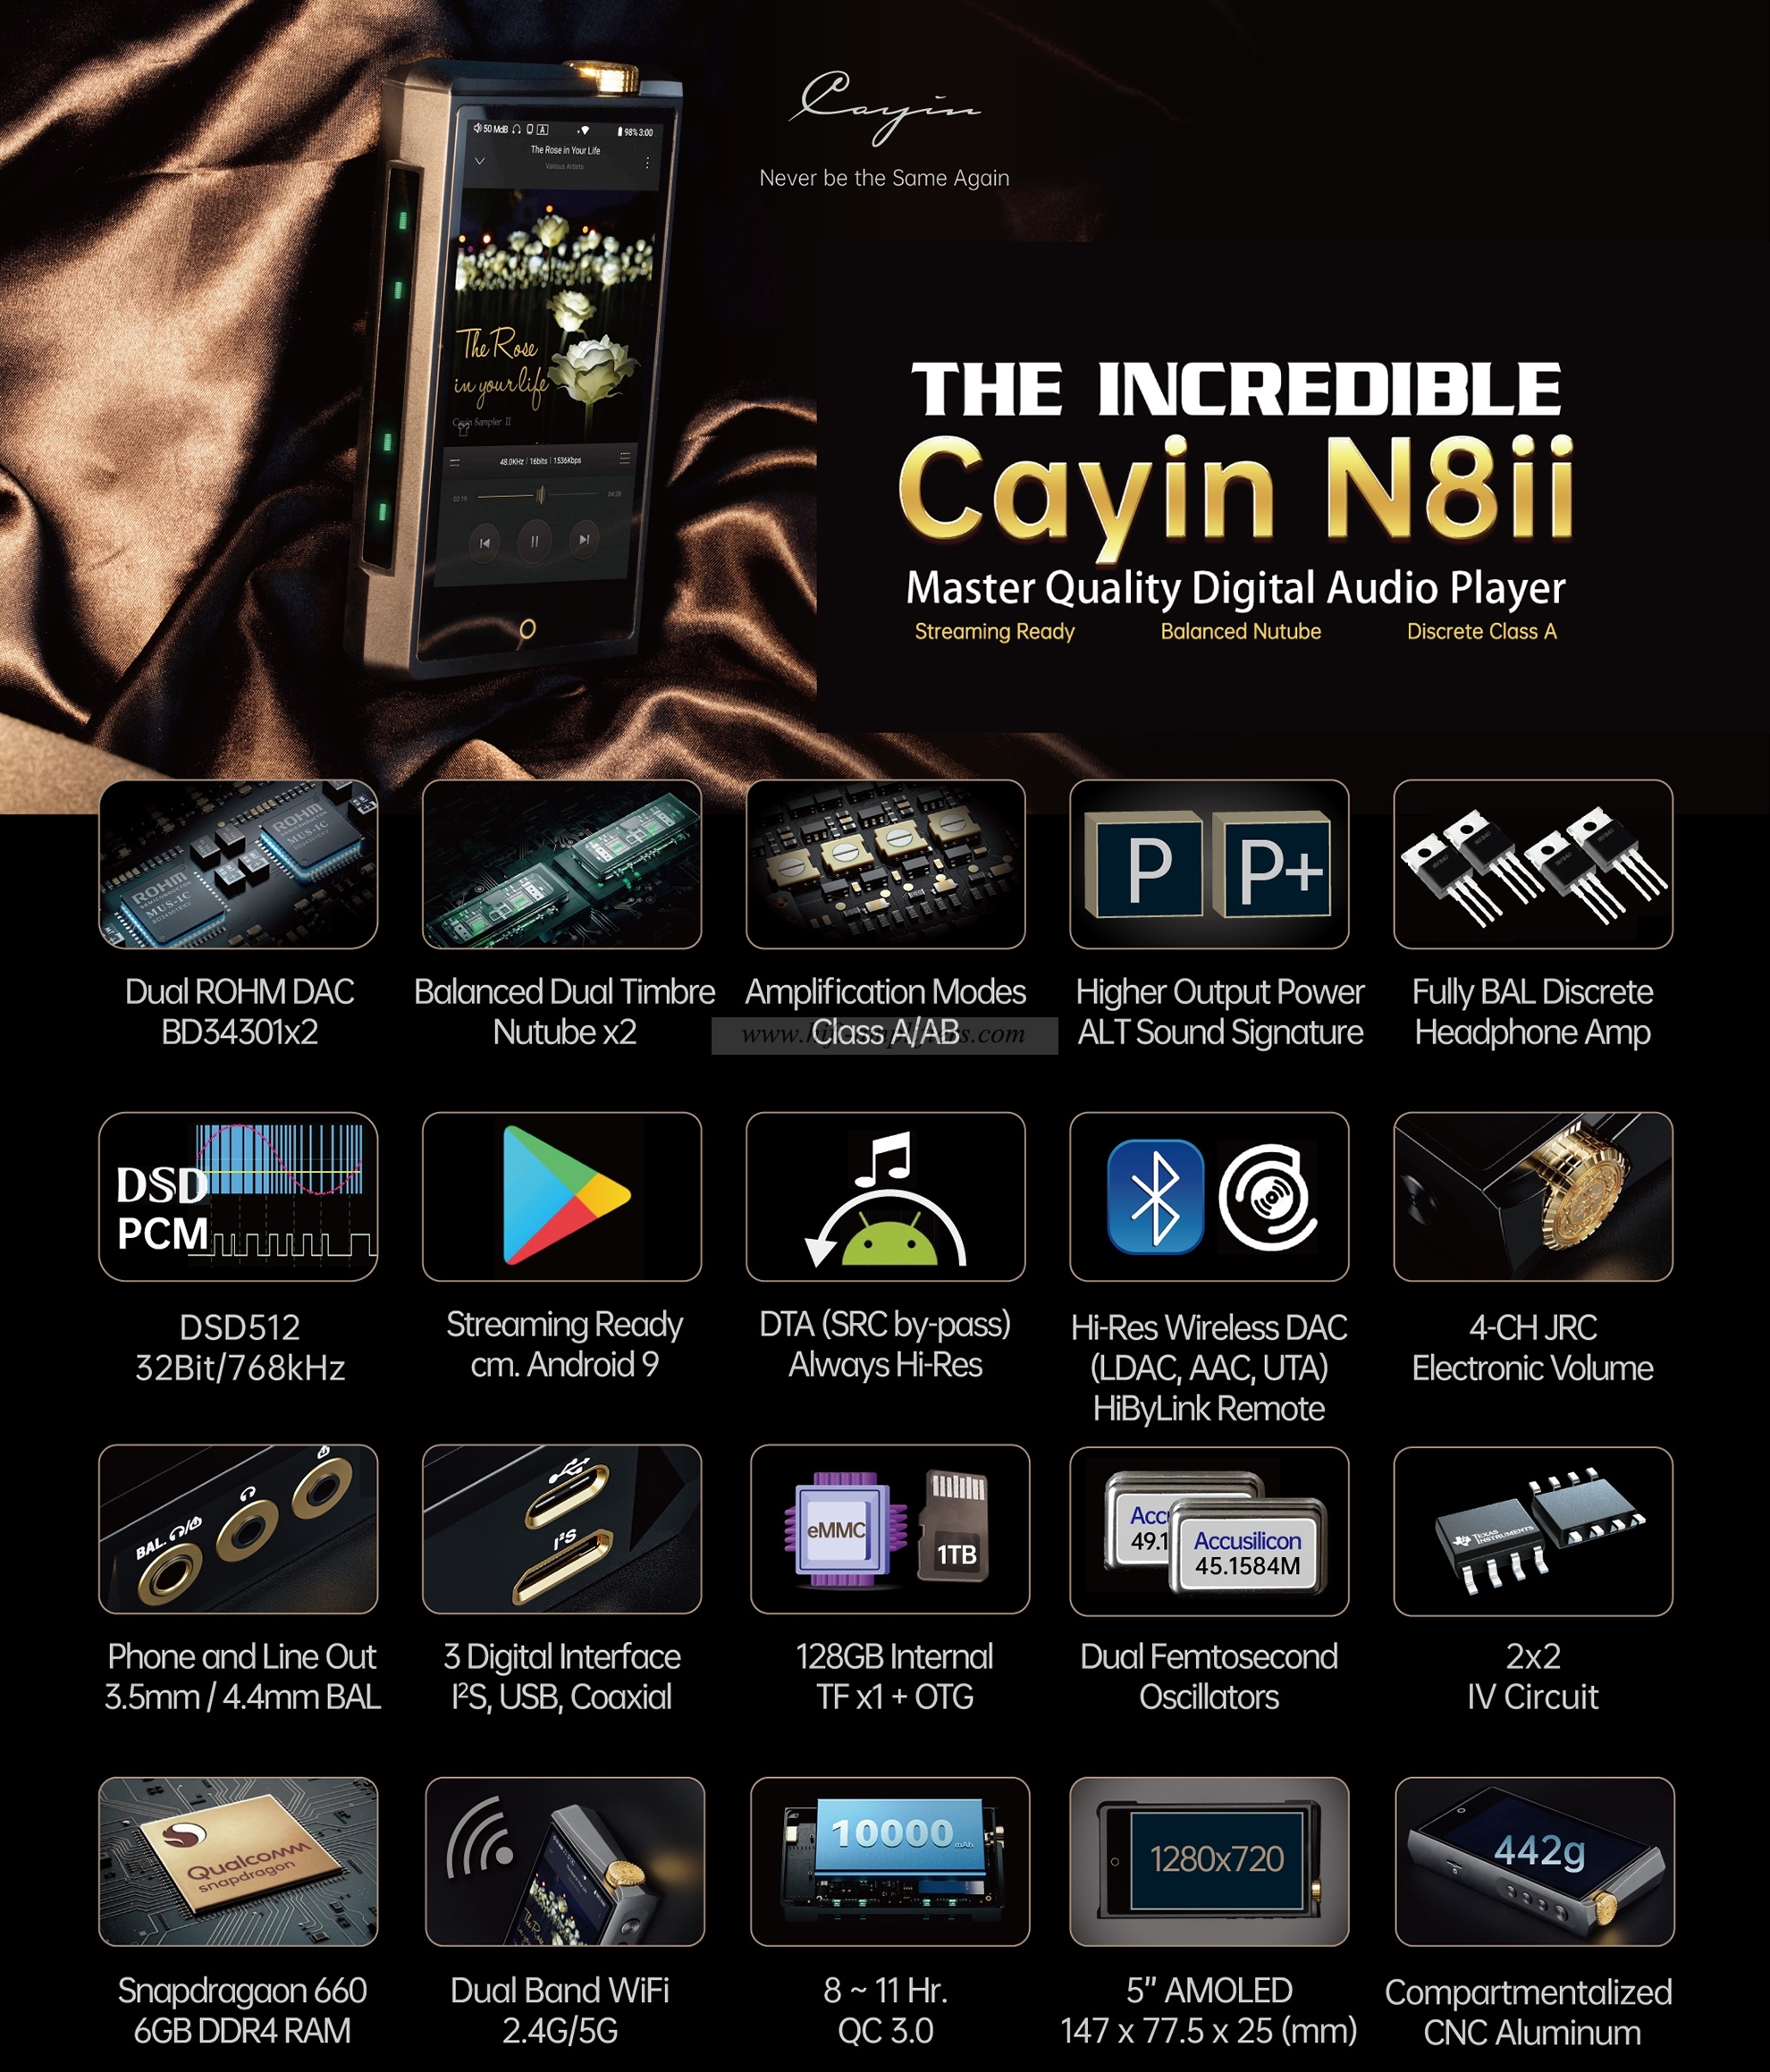 Cayin N8ii Master Quality Digital Audio Player Dual Vacuum Tube Dual DAC Dual Timbre Android 9 Class A/AB Full Bal DSD512